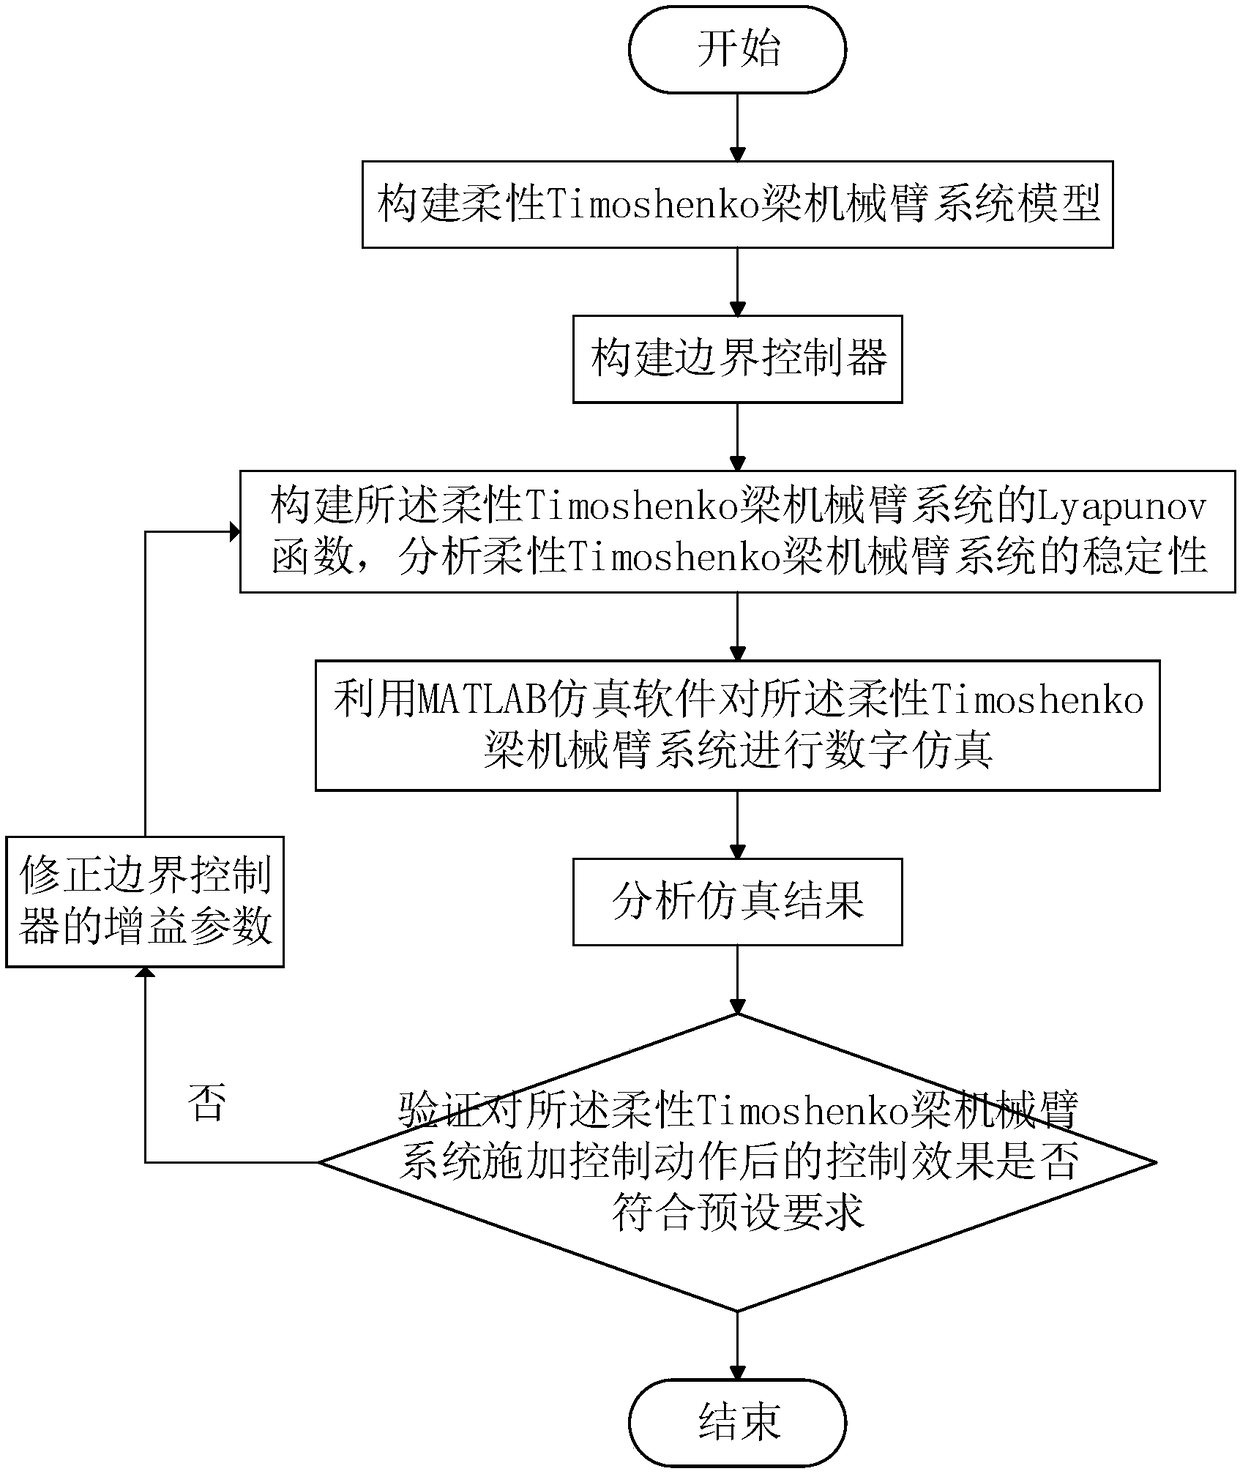 Boundary control method for anti-saturation of flexible Timoshenko beam manipulator